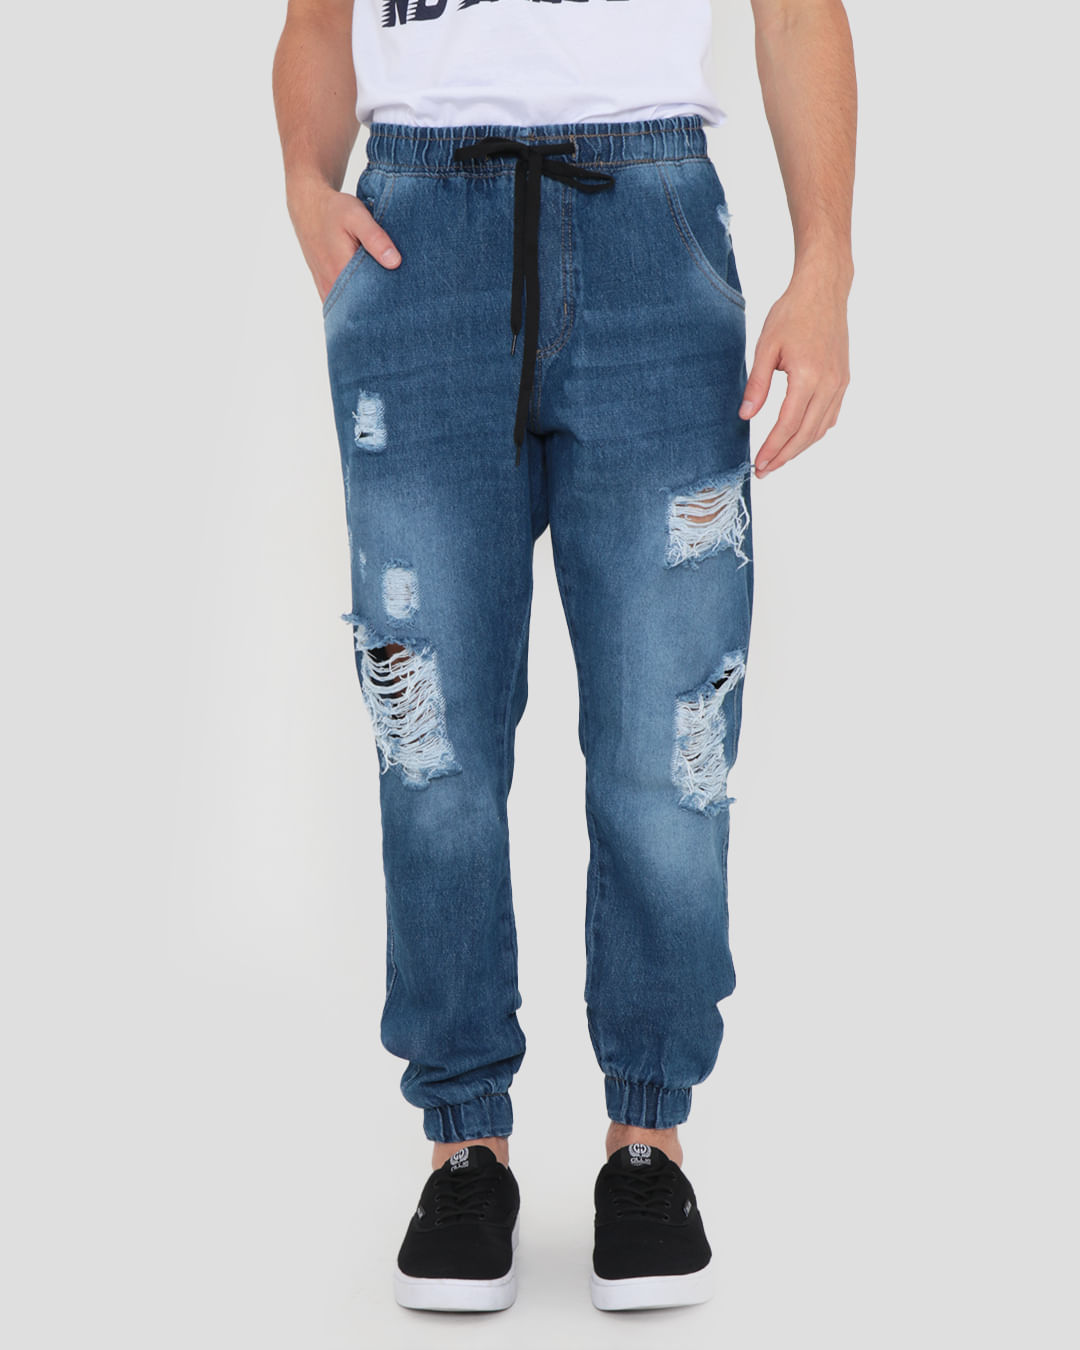 23121000963045-blue-jeans-medio-1